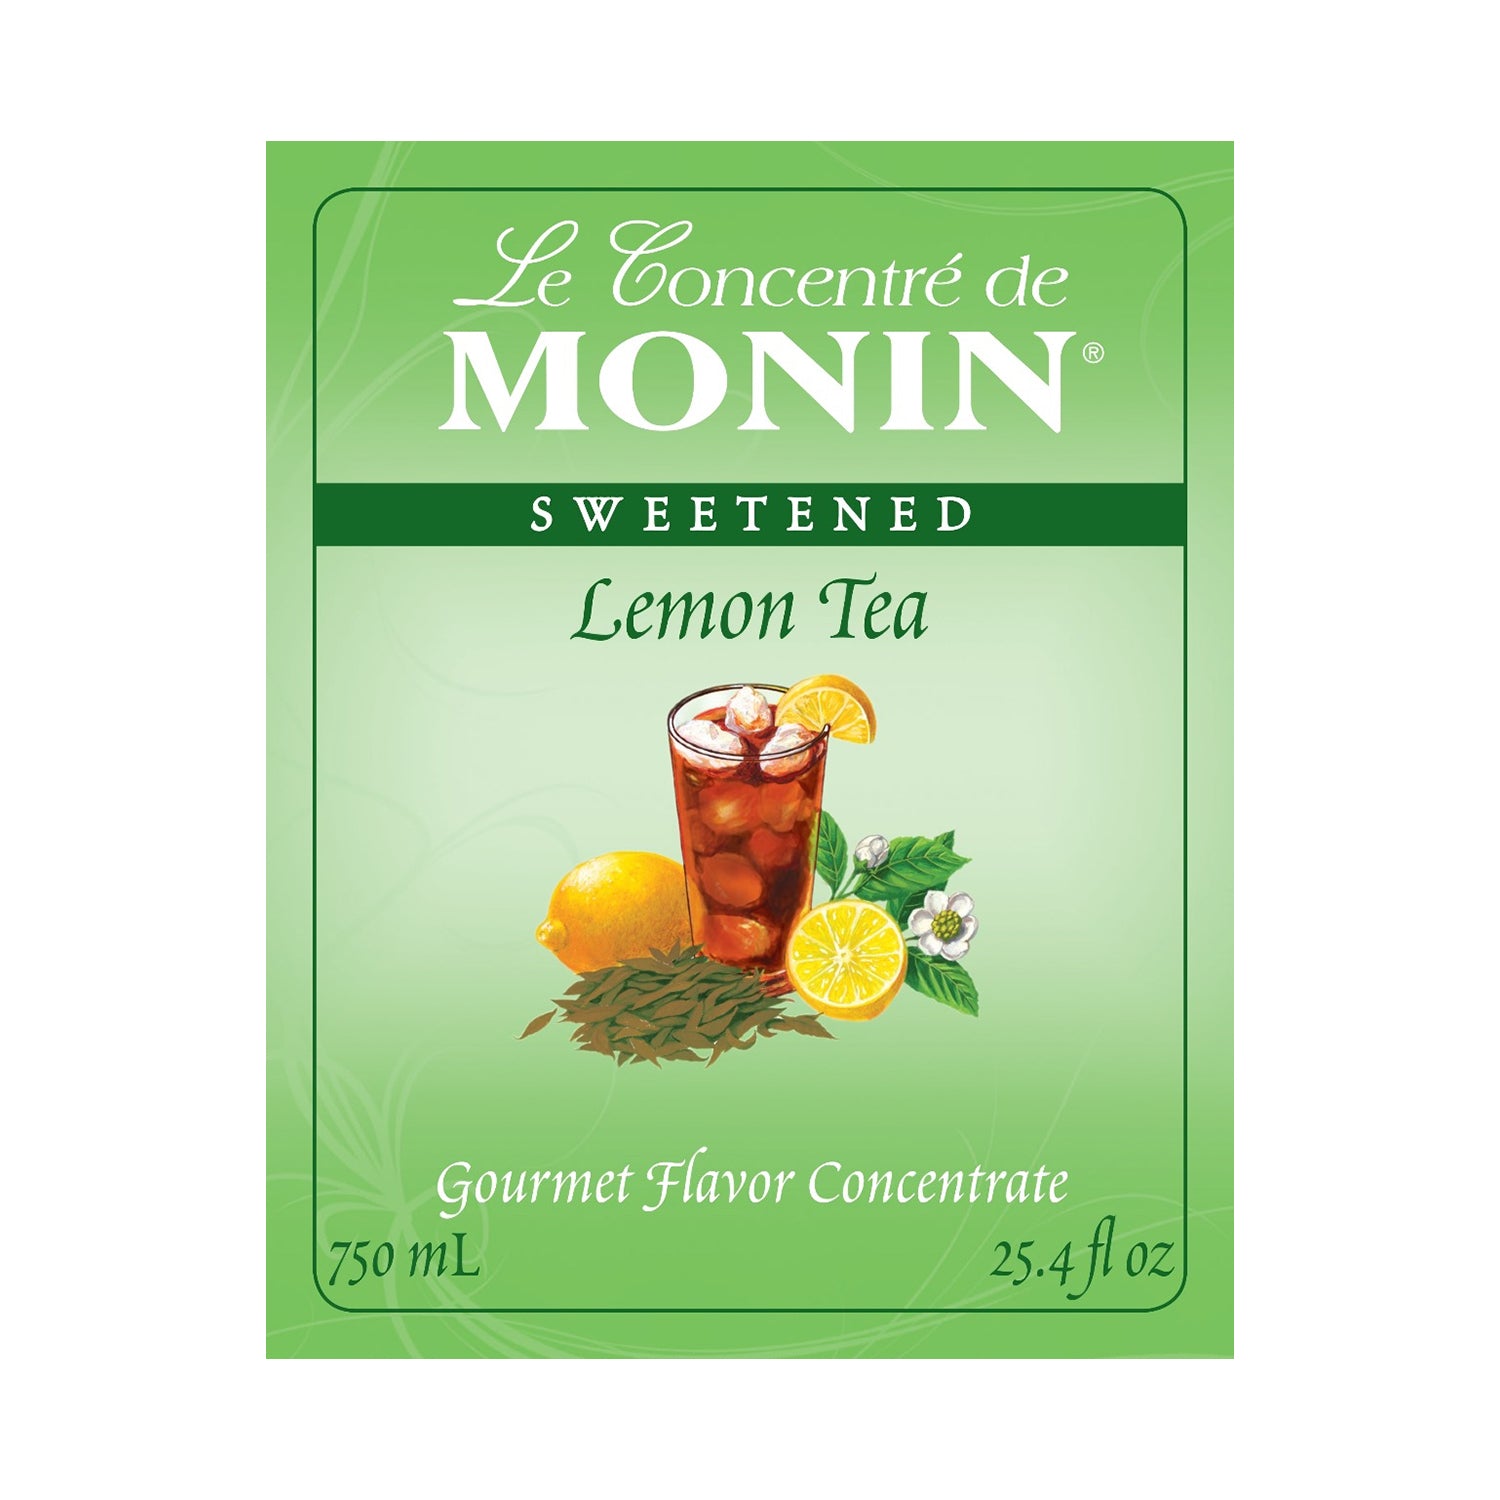 Monin Lemon Tea Concentrate Syrup brand label